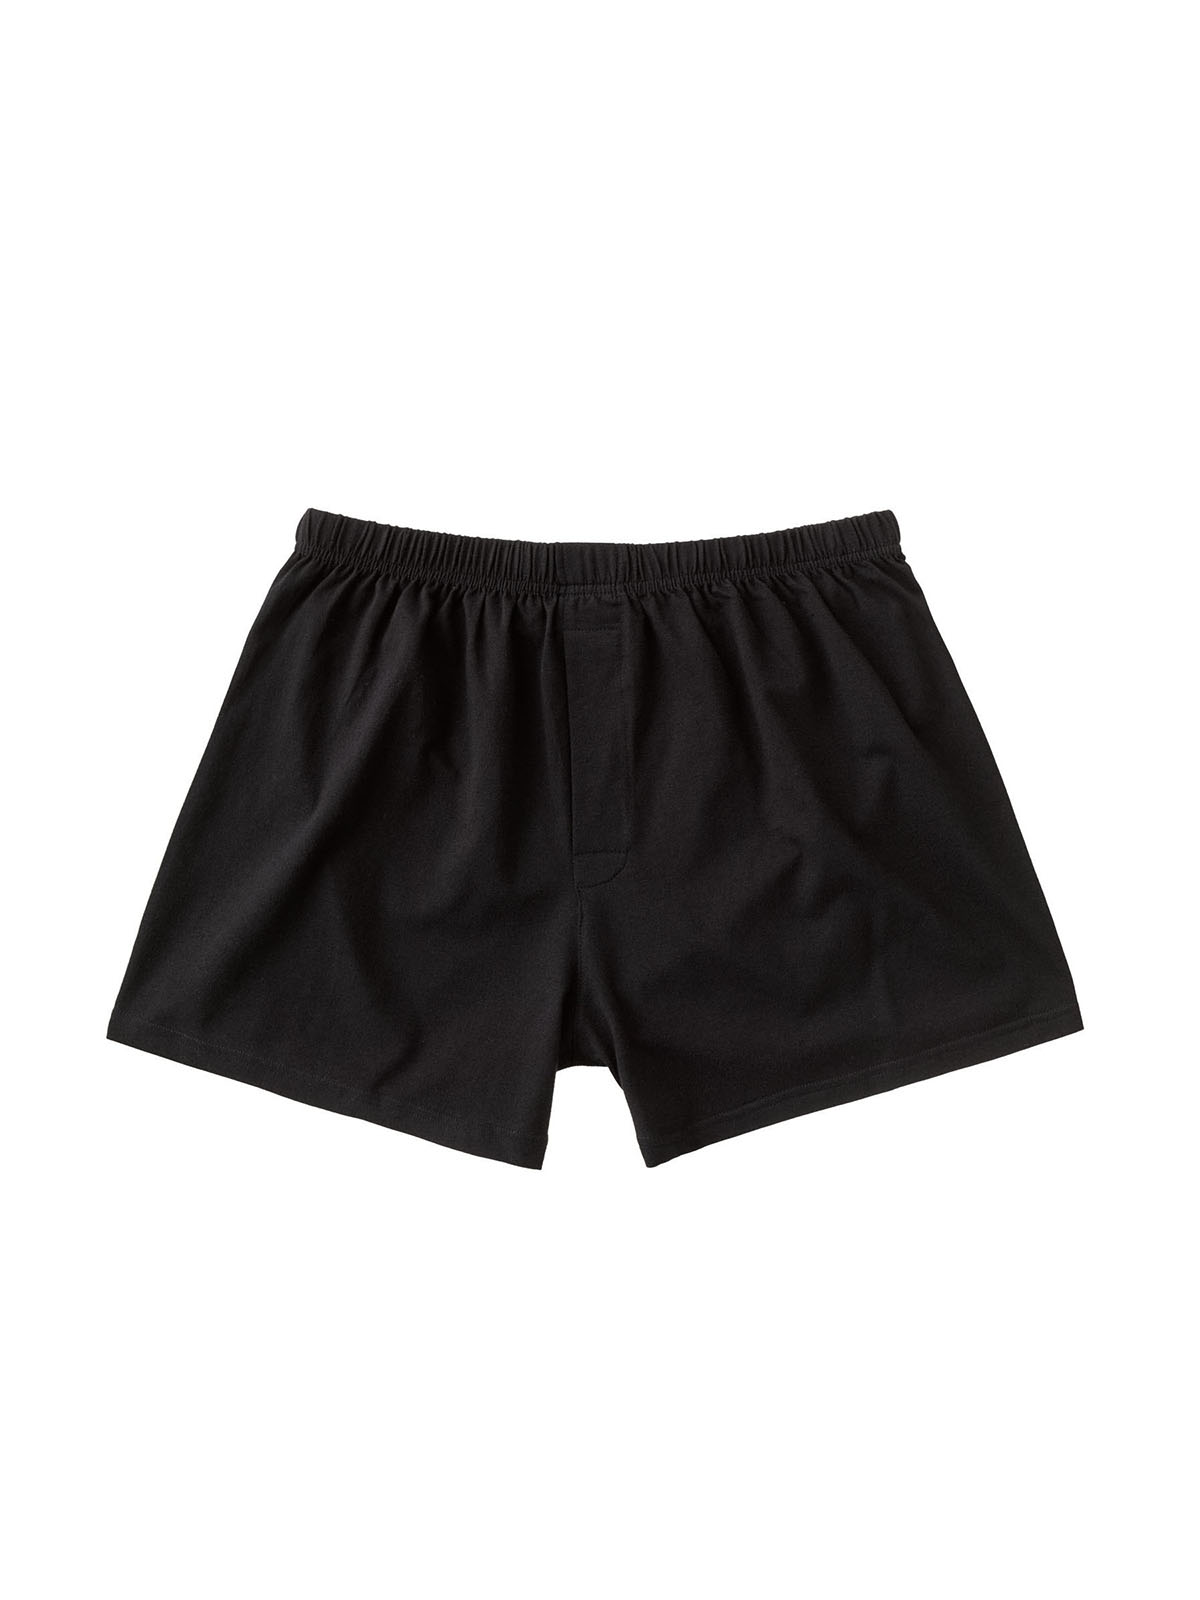 Boxer shorts 170281